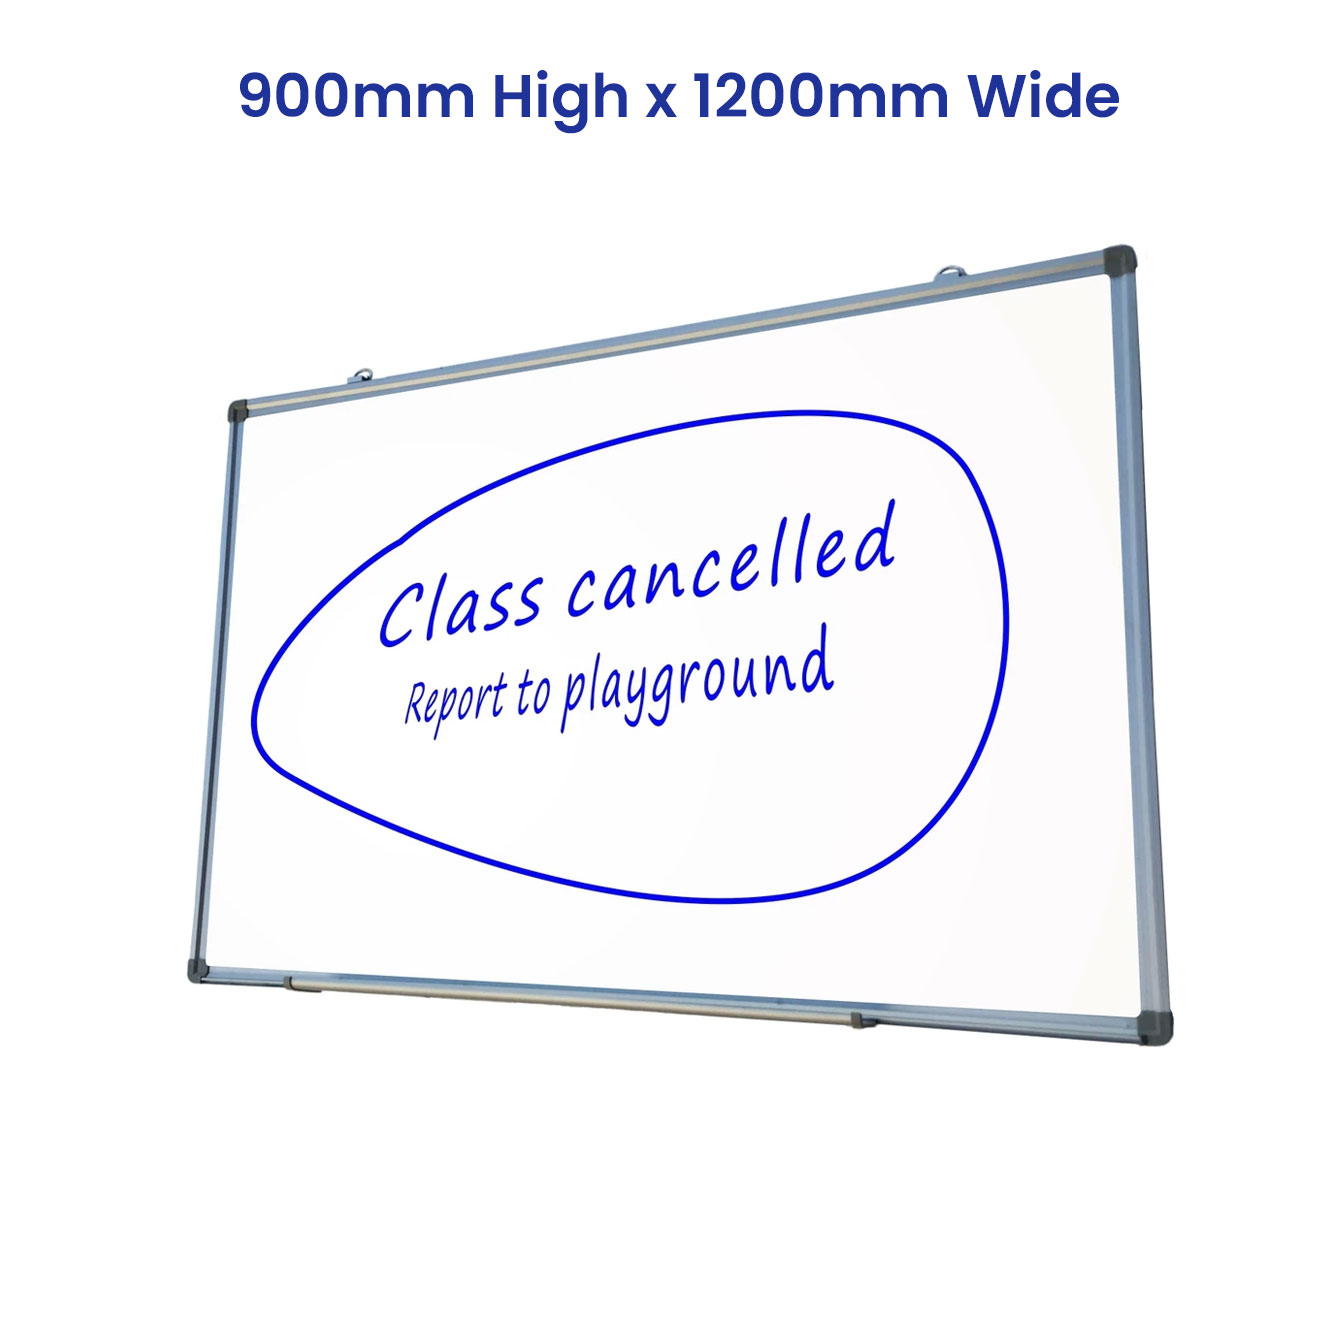 https://bigbanner.com.au/wp-content/uploads/2020/01/Office-Magnetic-White-Board-900mm-highx1200mm-wide-1.jpg